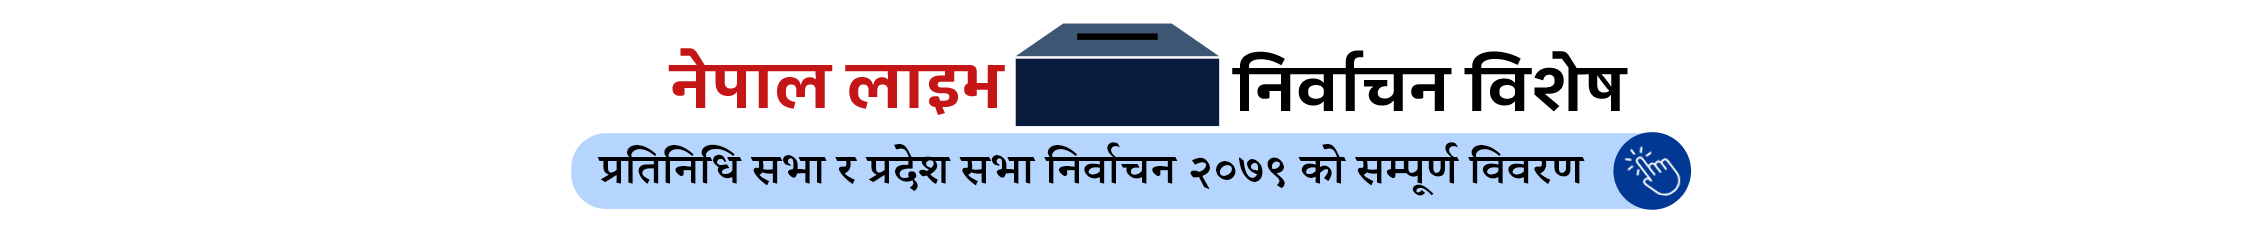 Nepallive election